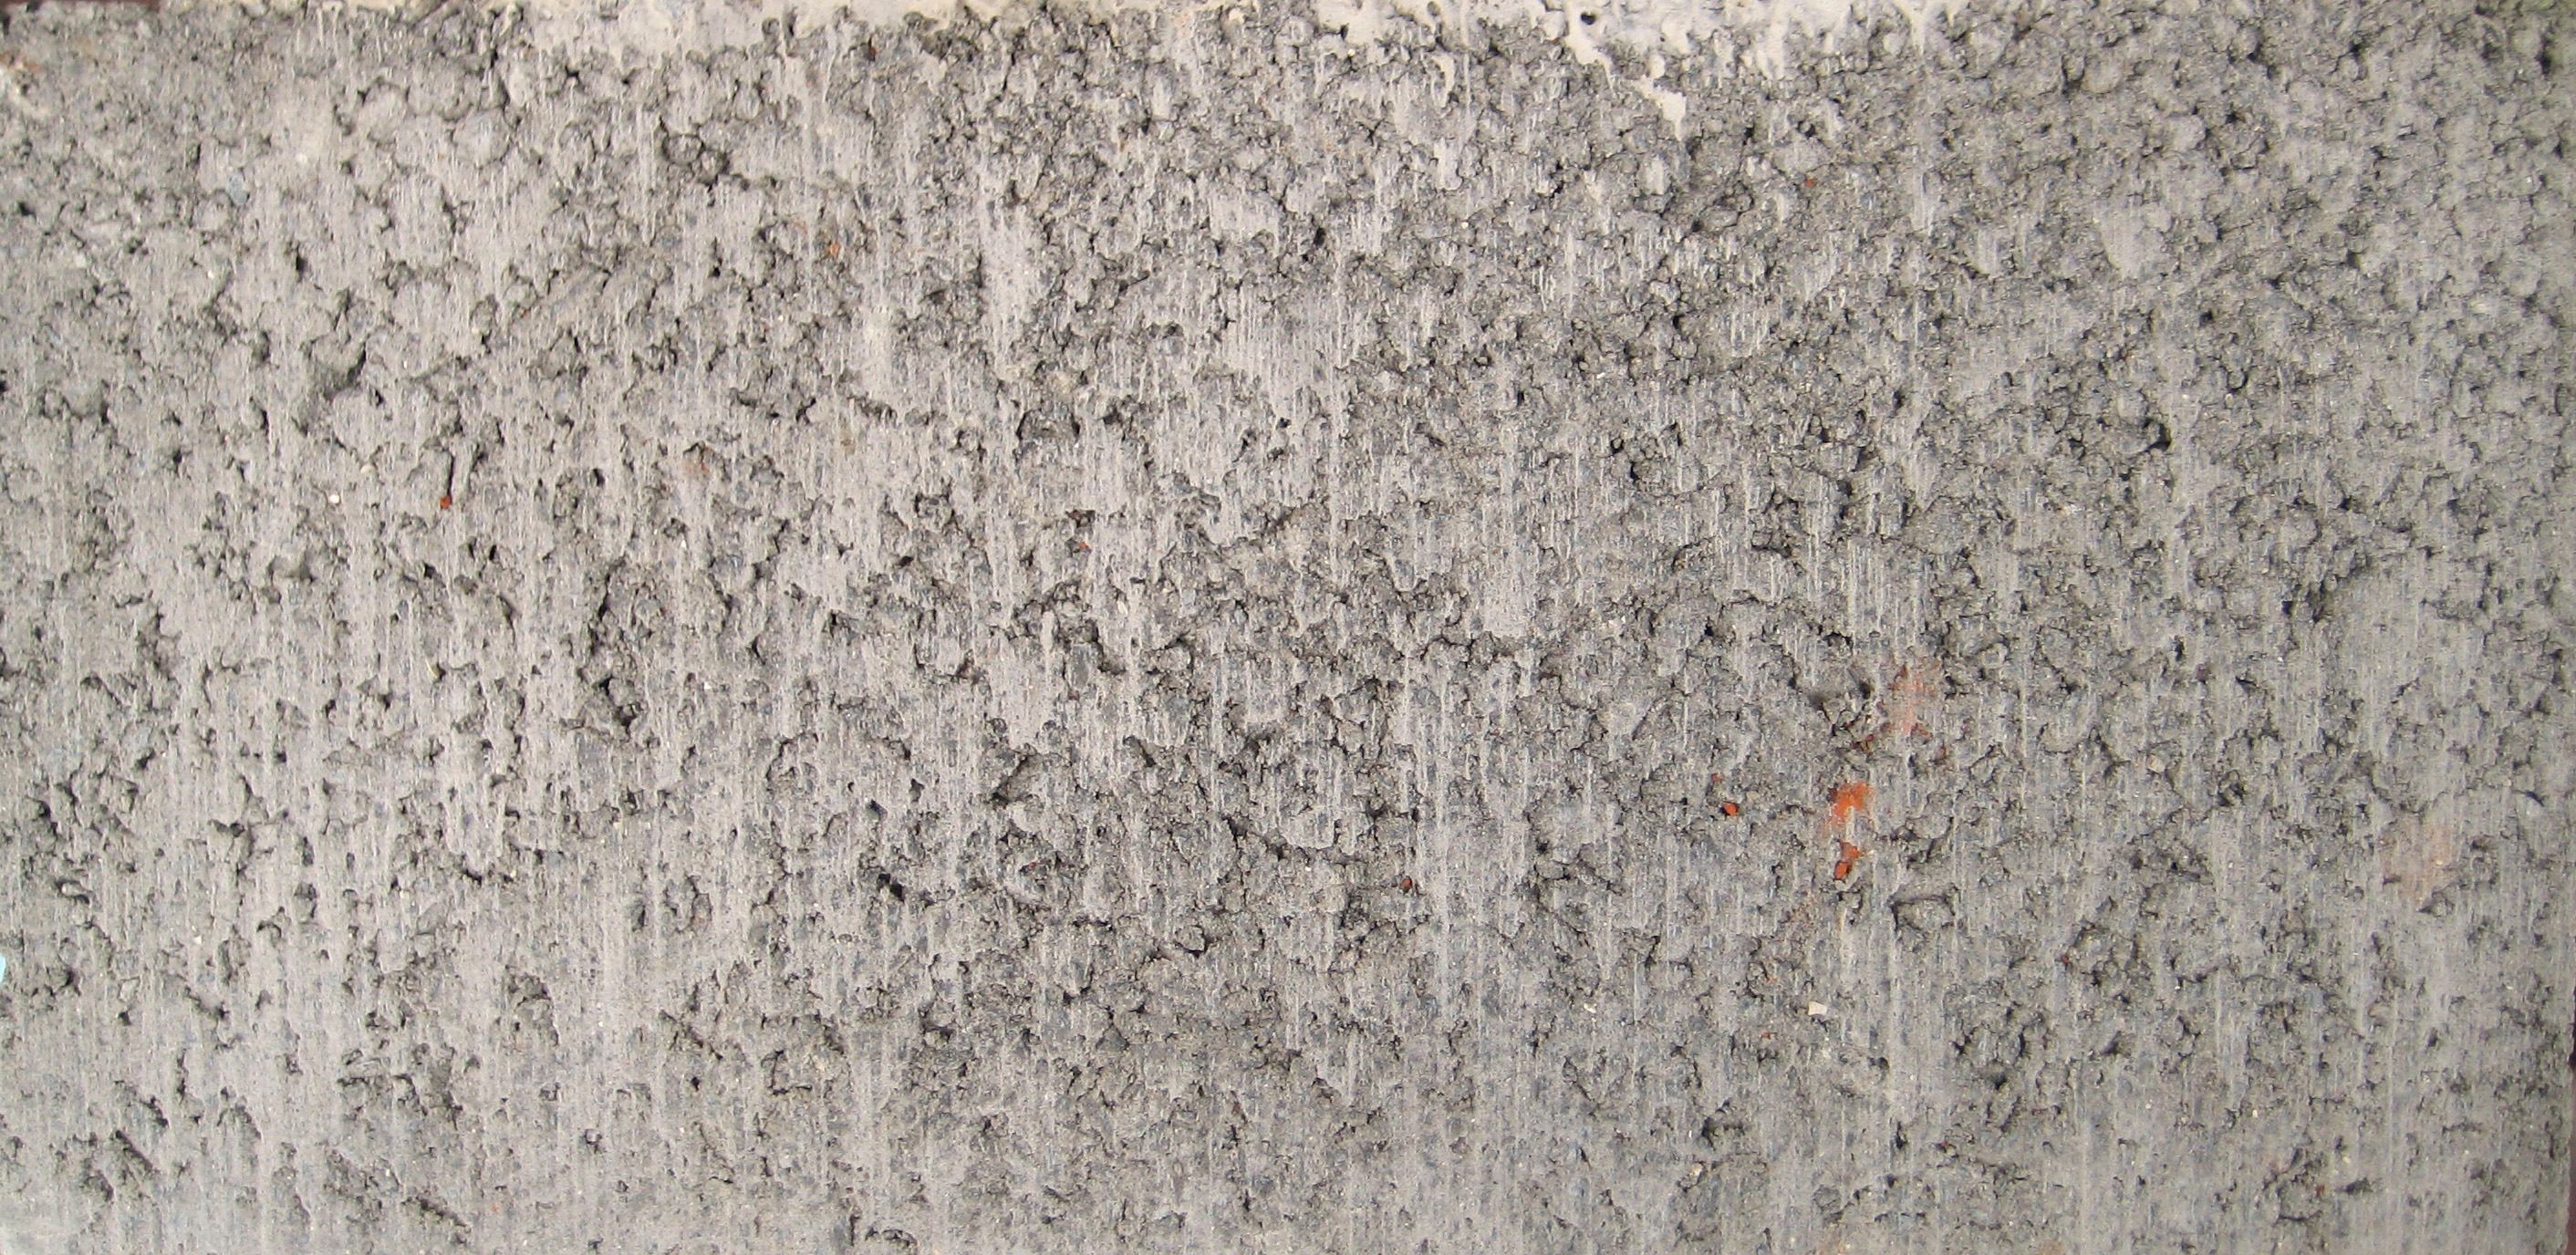 Asphalt texture background, free picture download